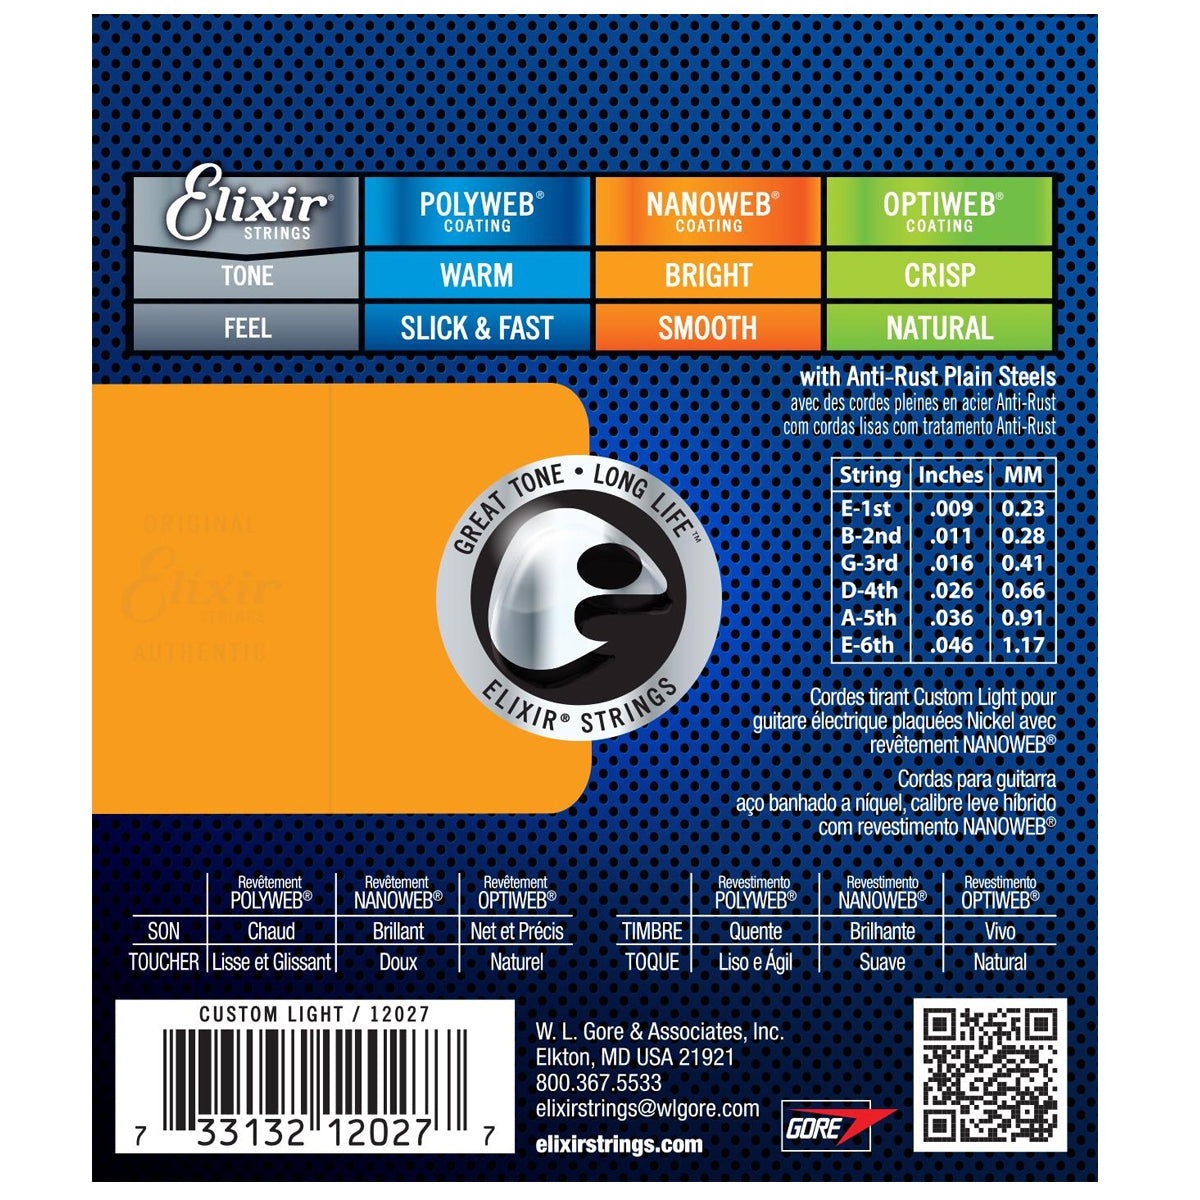 Elixir 12027 Electric Custom Light Nickel Plated Steel Nanoweb 0.09-0.46